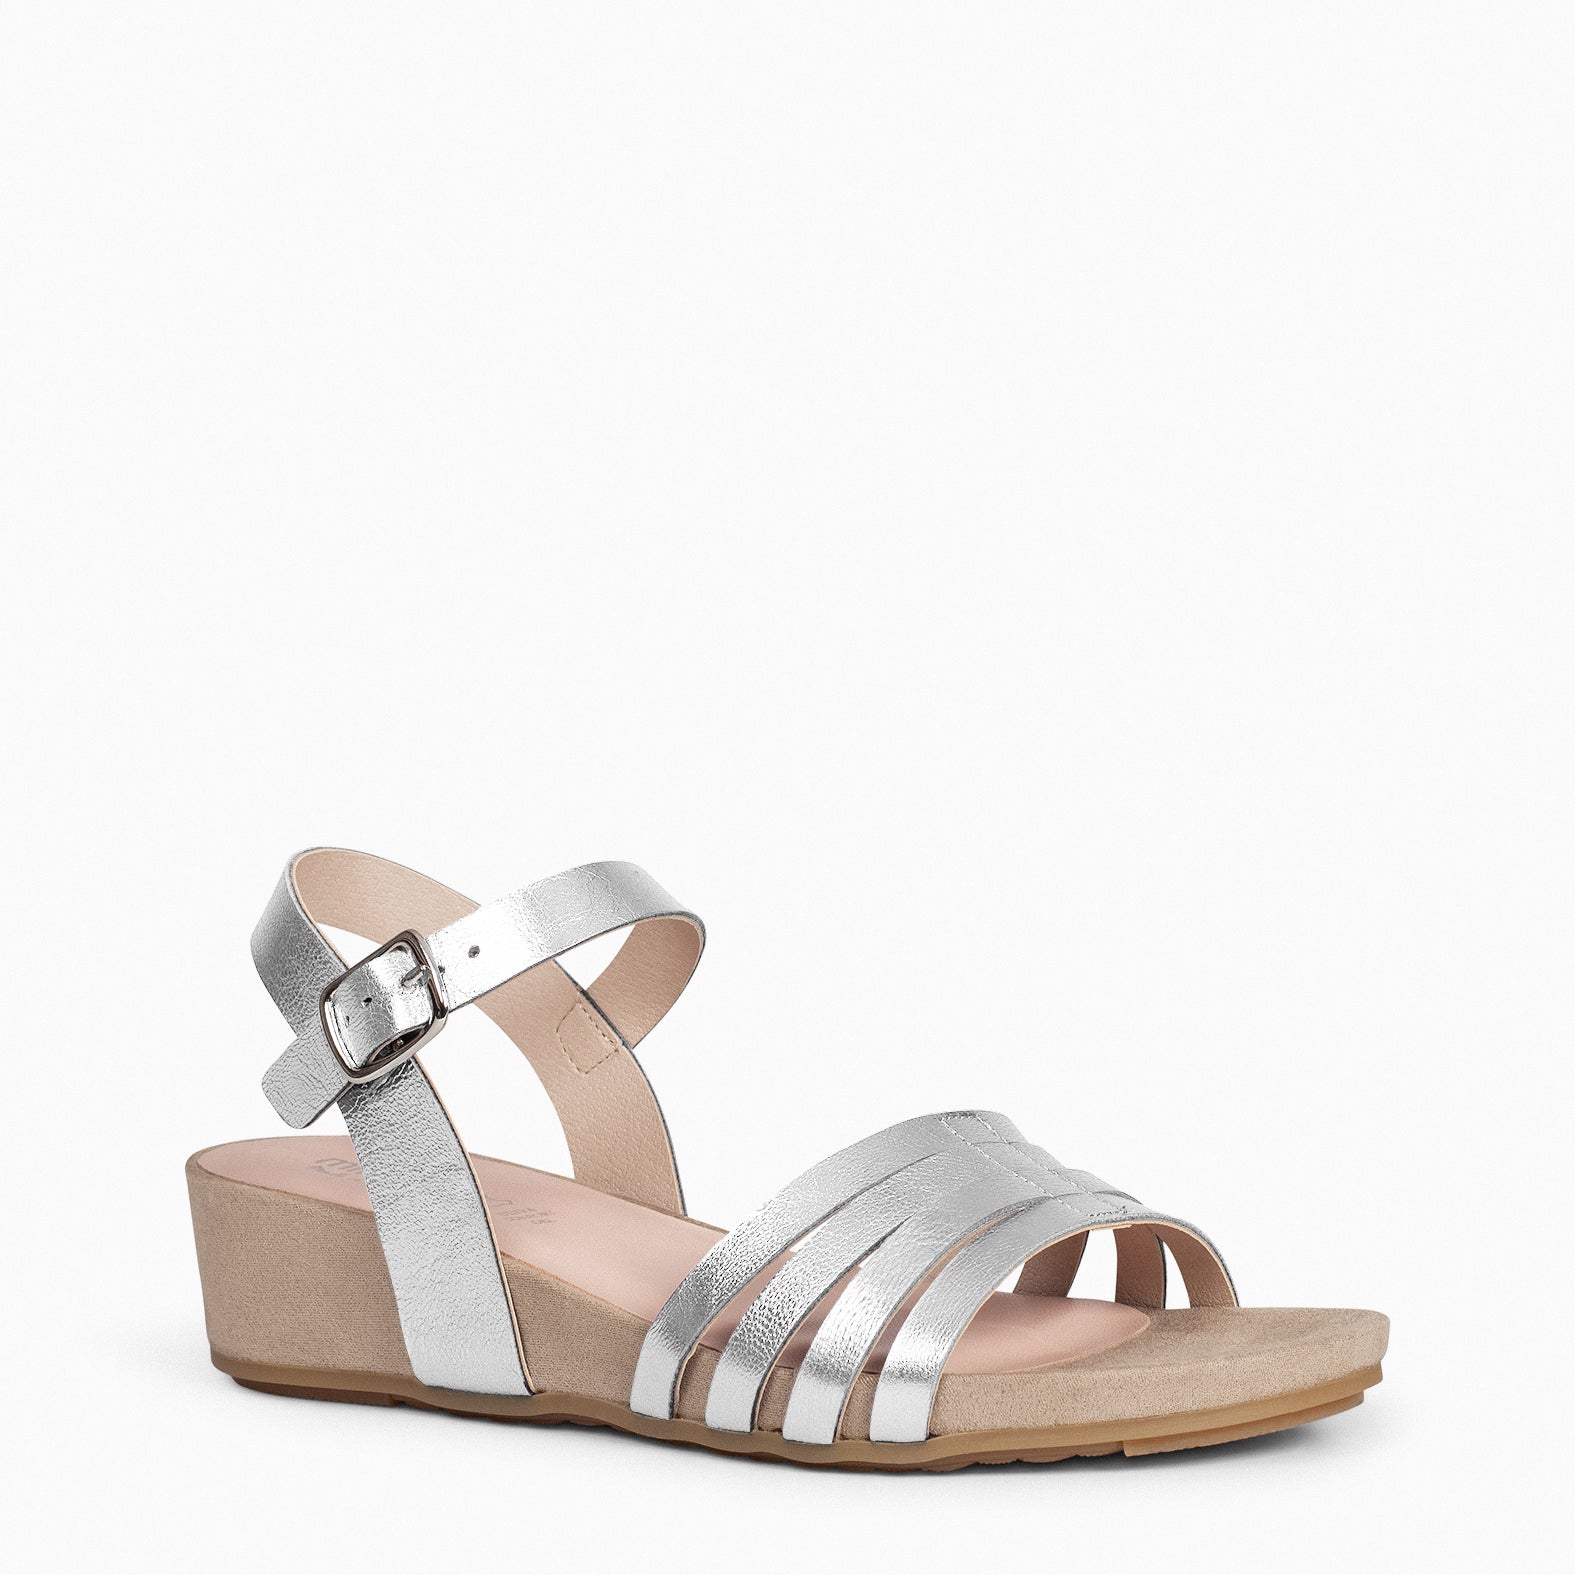 MESINA – SILVER Wedge sandal with metallic straps 